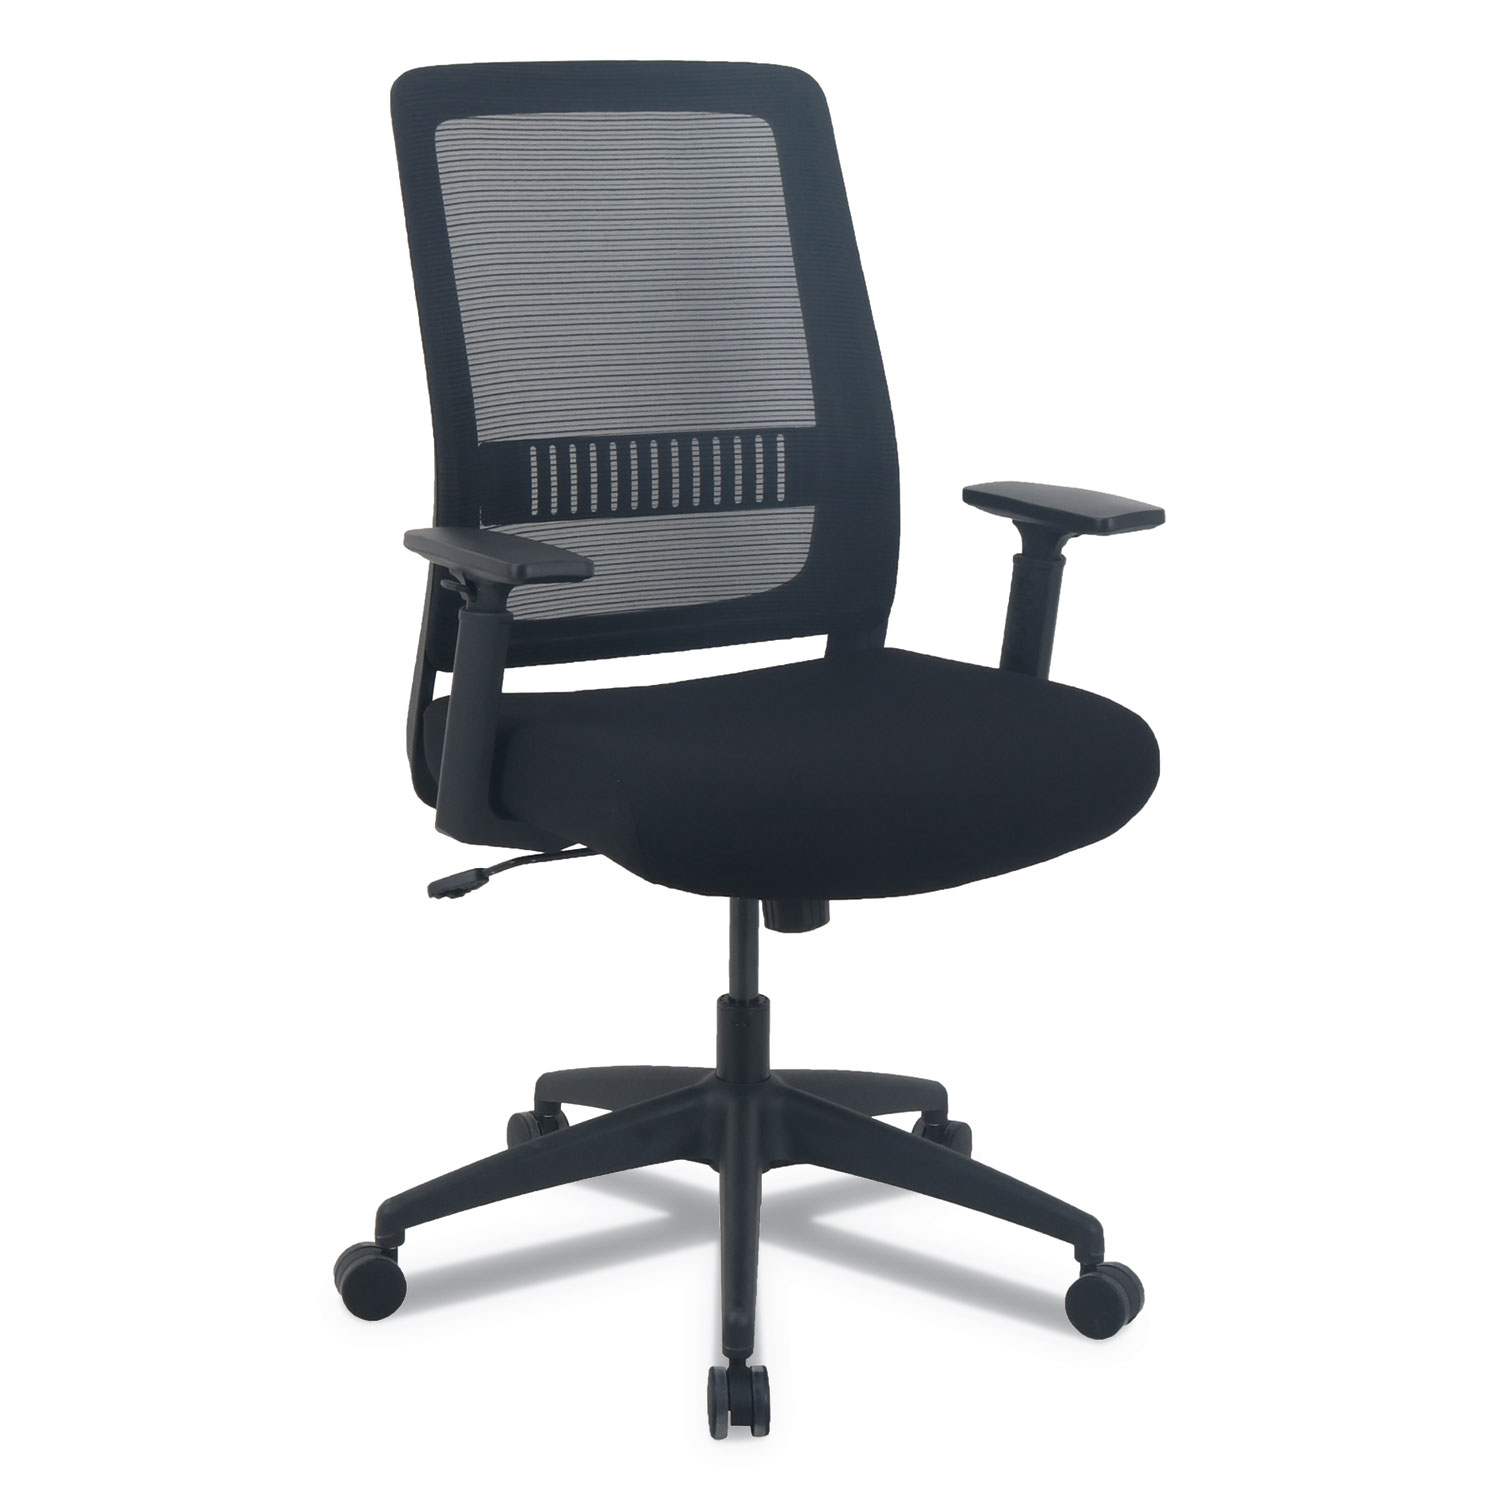  Alera ALEEY4214B Alera EY Series Swivel Tilt Chair, Supports up to 275 lbs., Black Seat/Black Back, Black Base (ALEEY4214B) 